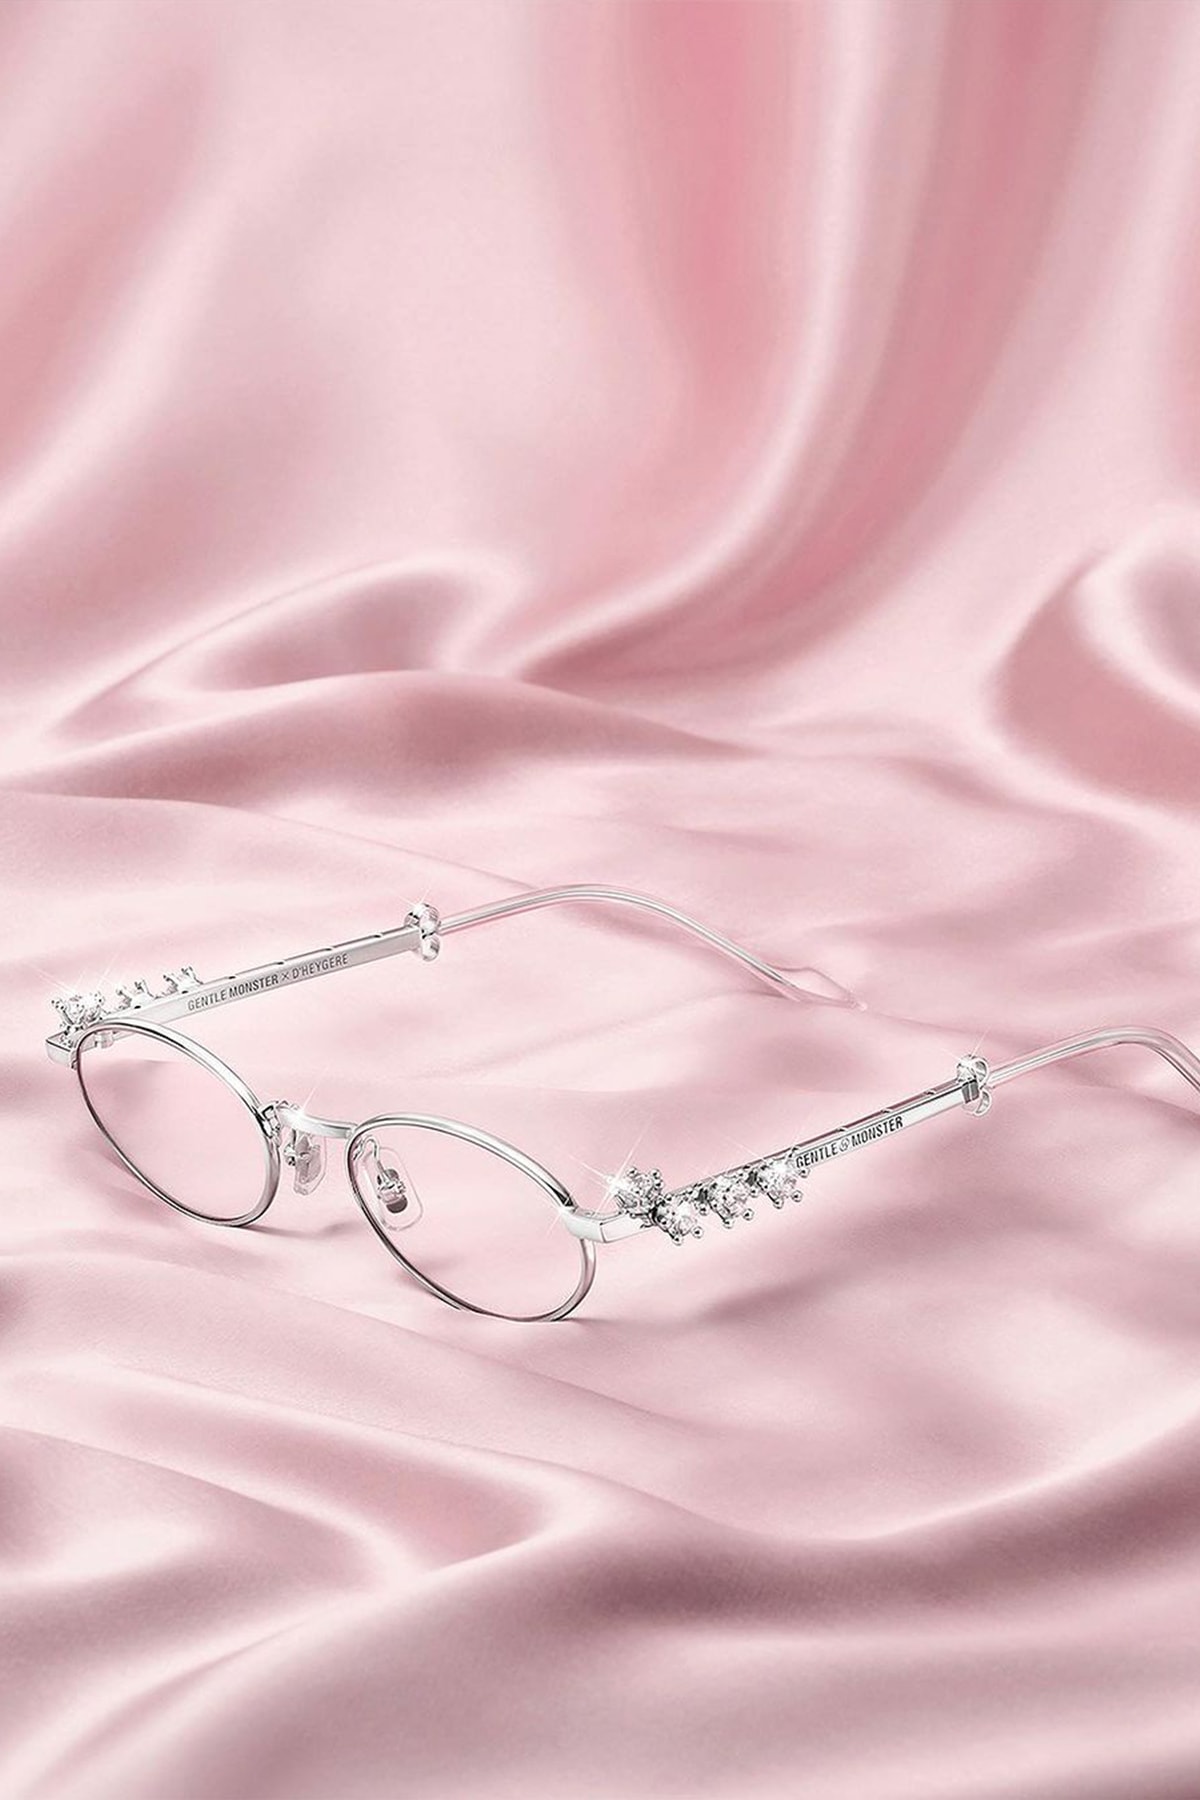 Gentle Monster 攜手首飾品牌 D’heygere 推出全新奢華眼鏡系列